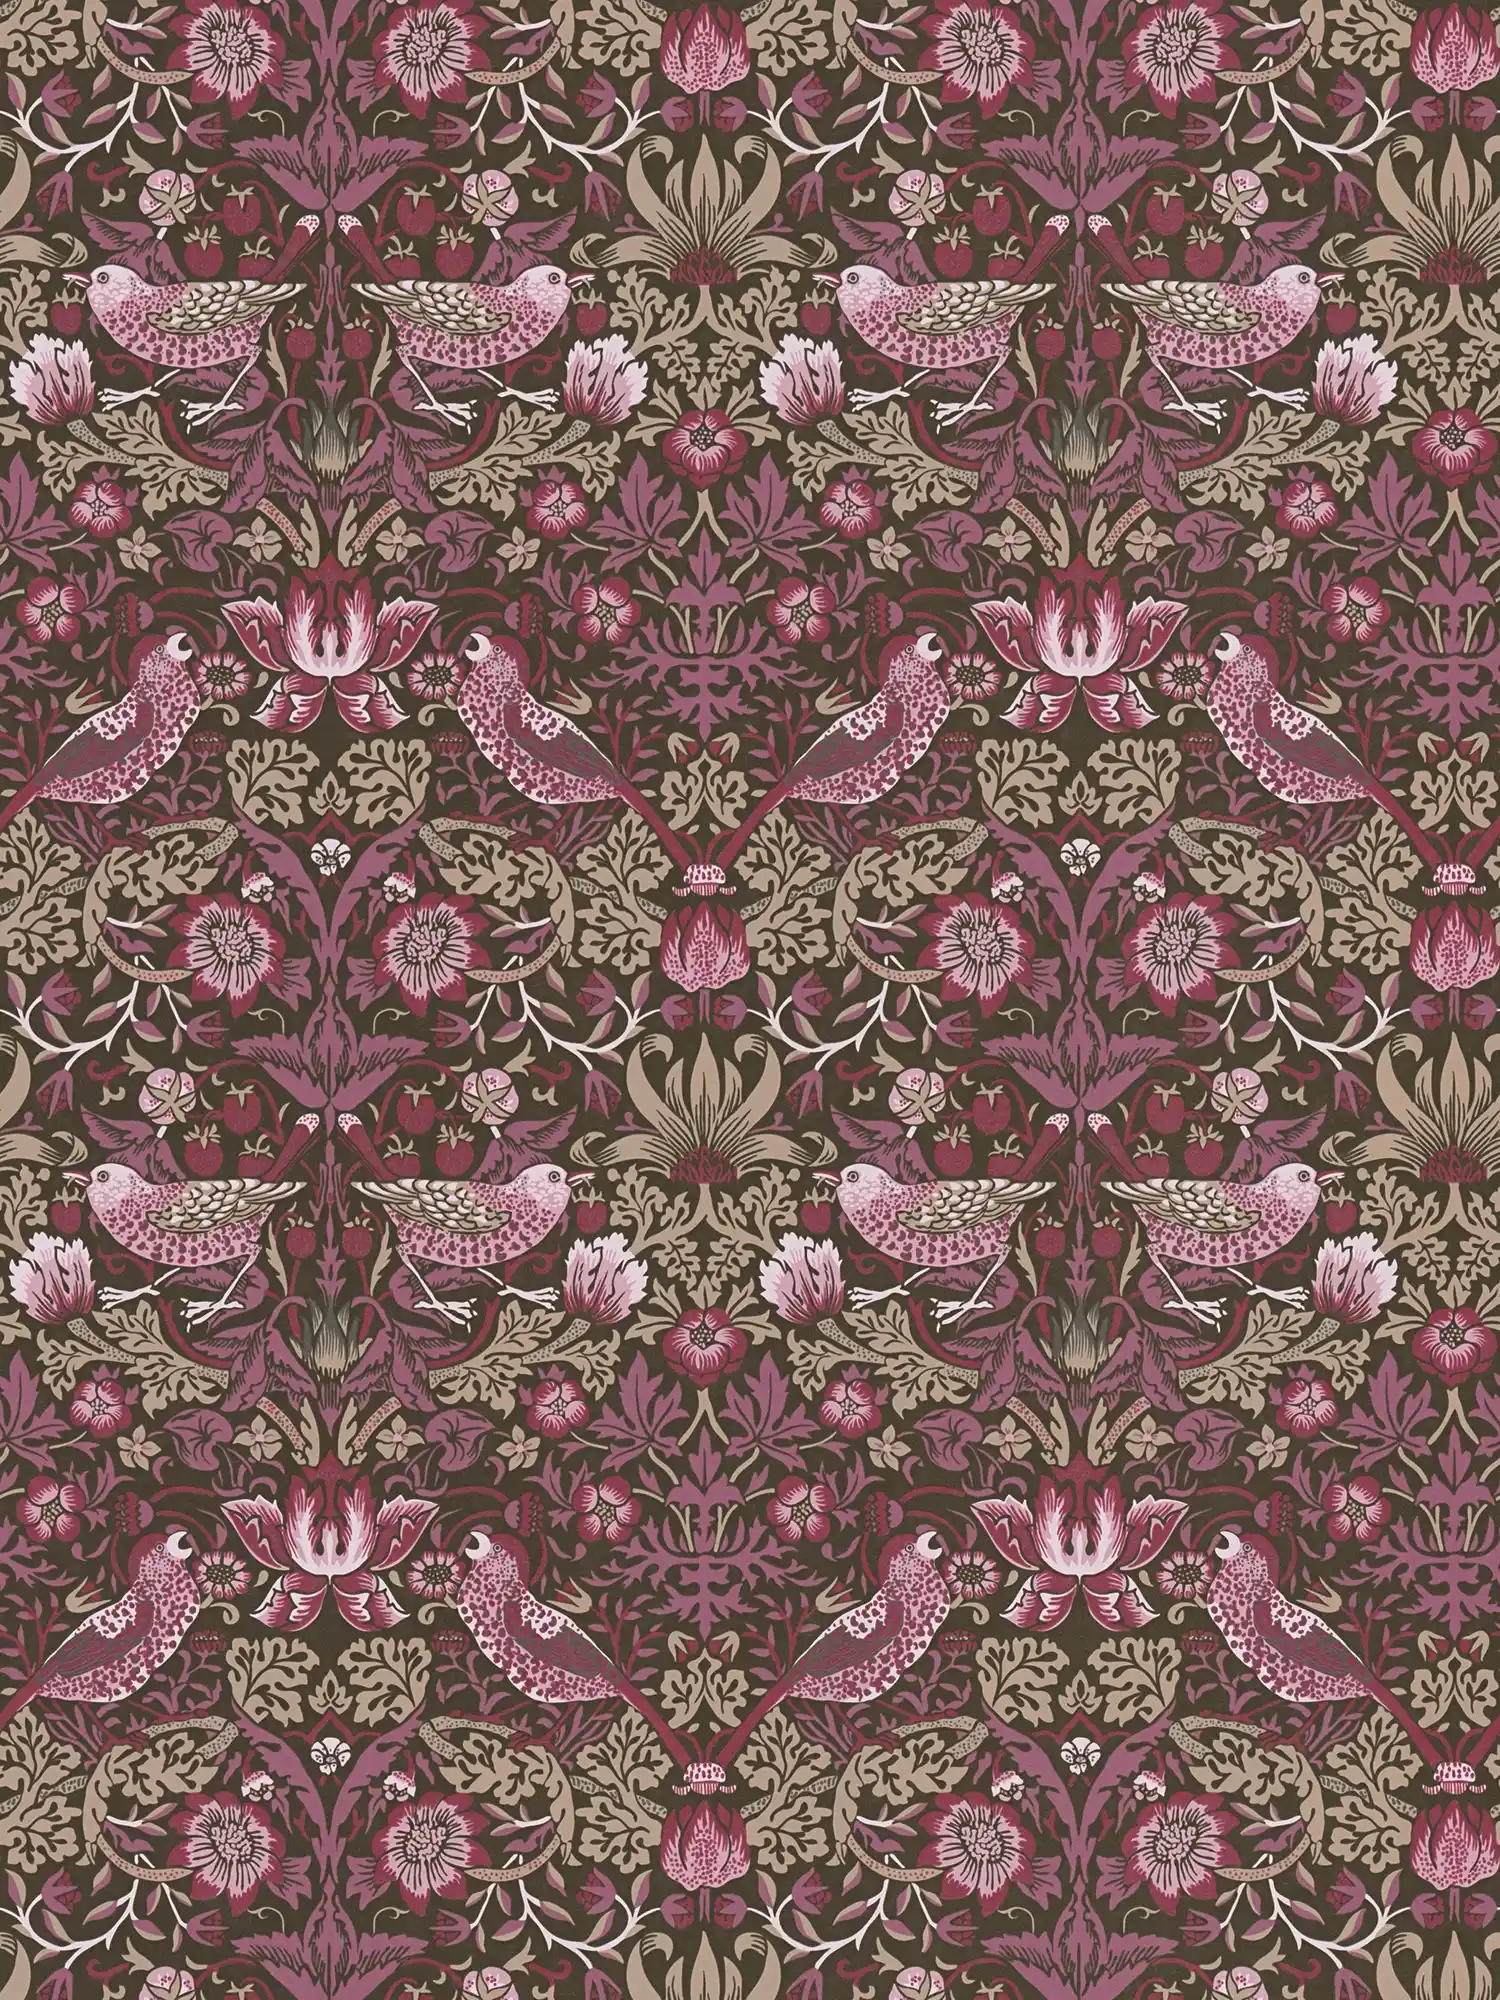 Non-woven wallpaper floral pattern with birds & berries - purple , beige, black
